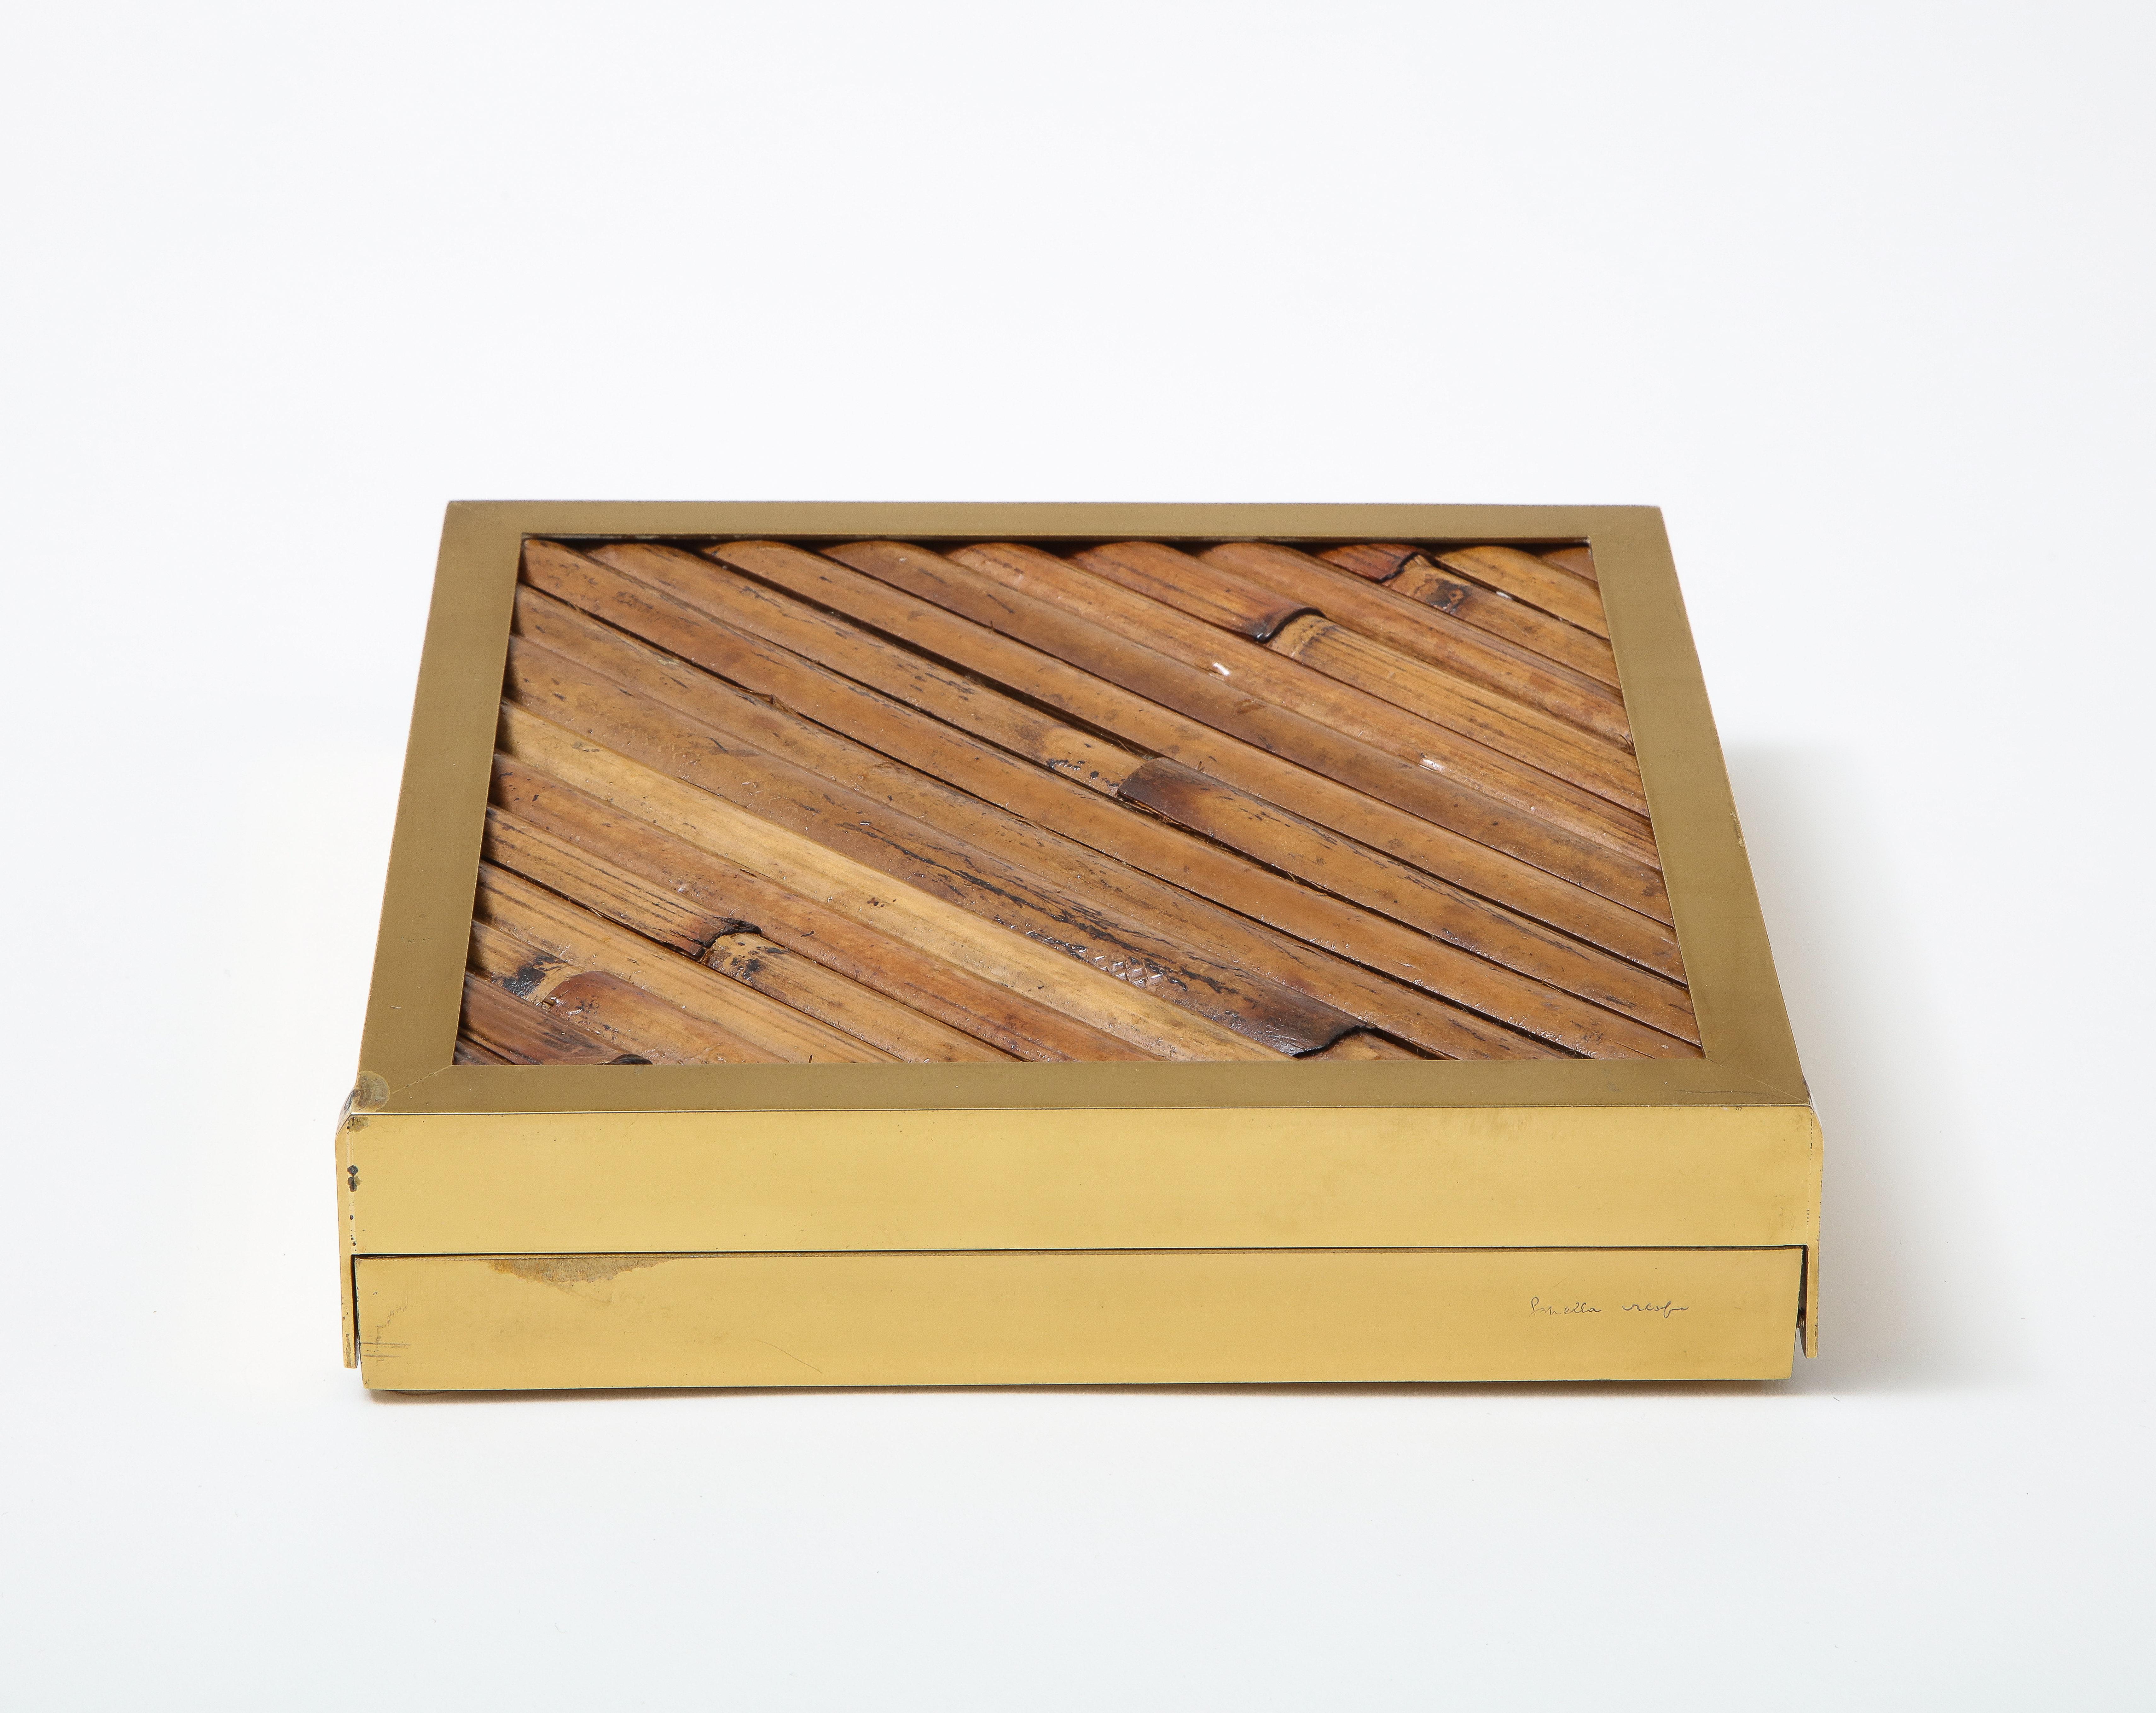 Lacquered Gabriella Crespi Rare Signed Bamboo and Brass Box, Italy, 1970s